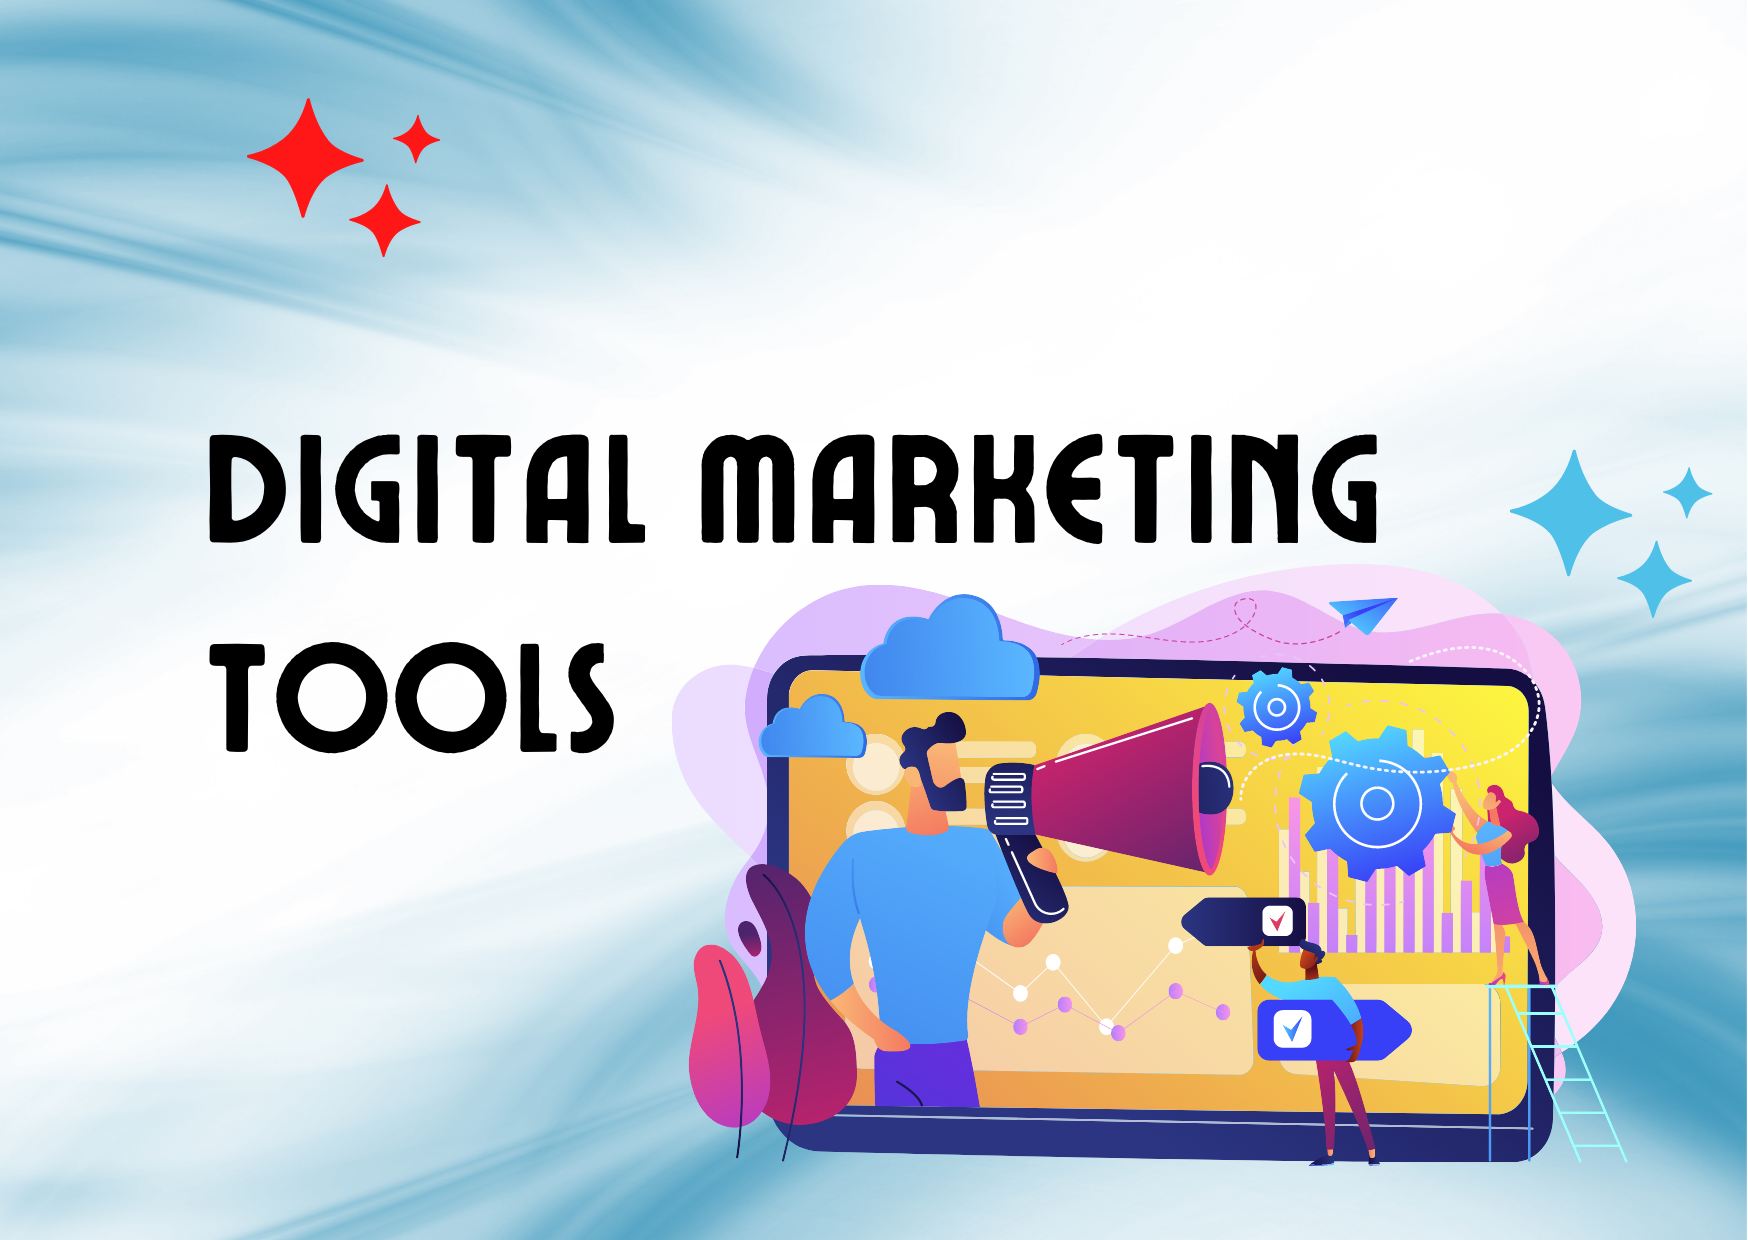 Most effective tools of Digital Marketing